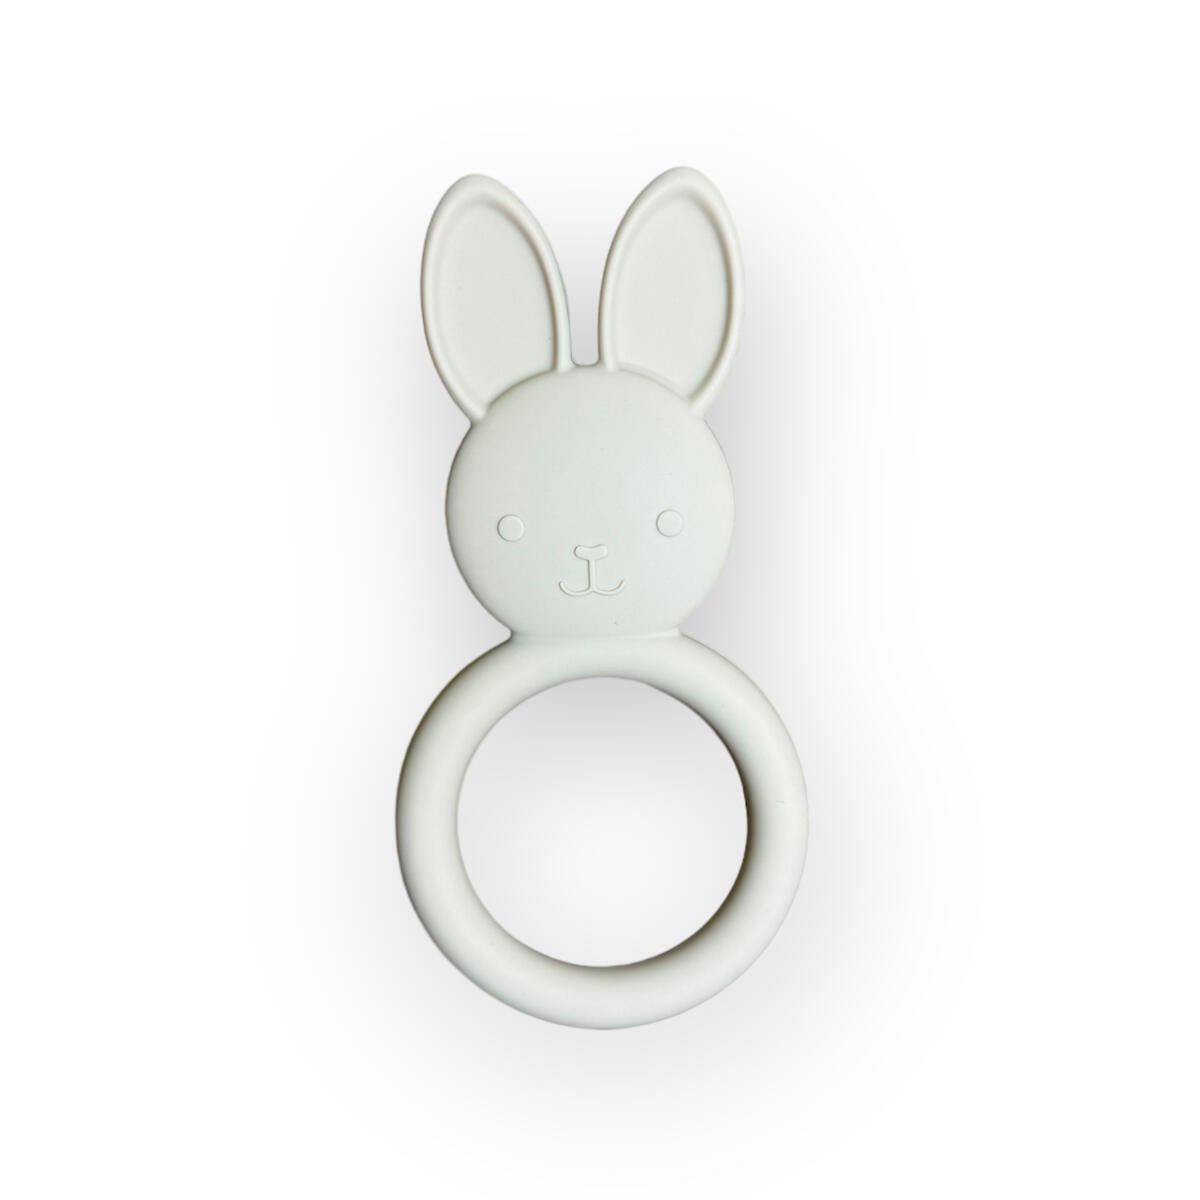 Bunny Teething Ring - Lush Lemon - Children's Accessories - Three Hearts - 006700671